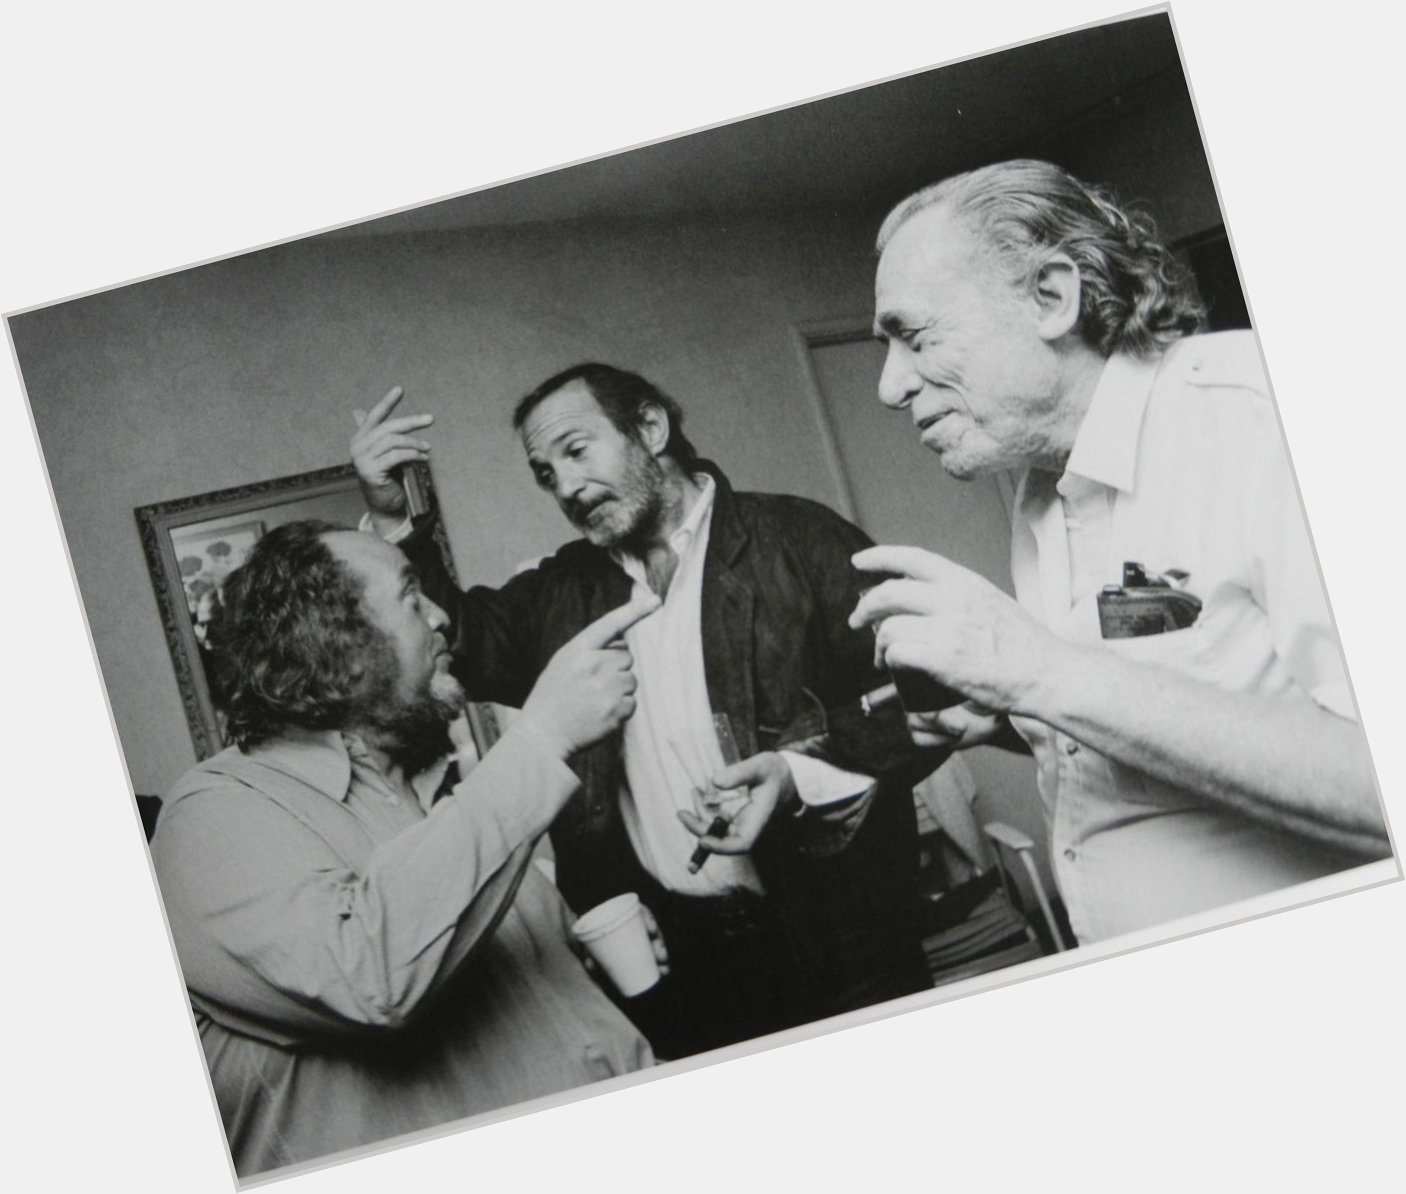 Happy birthday Ben Gazzara! With Marco Ferreri & Charles Bukowski, Tales of Ordinary Madness >  